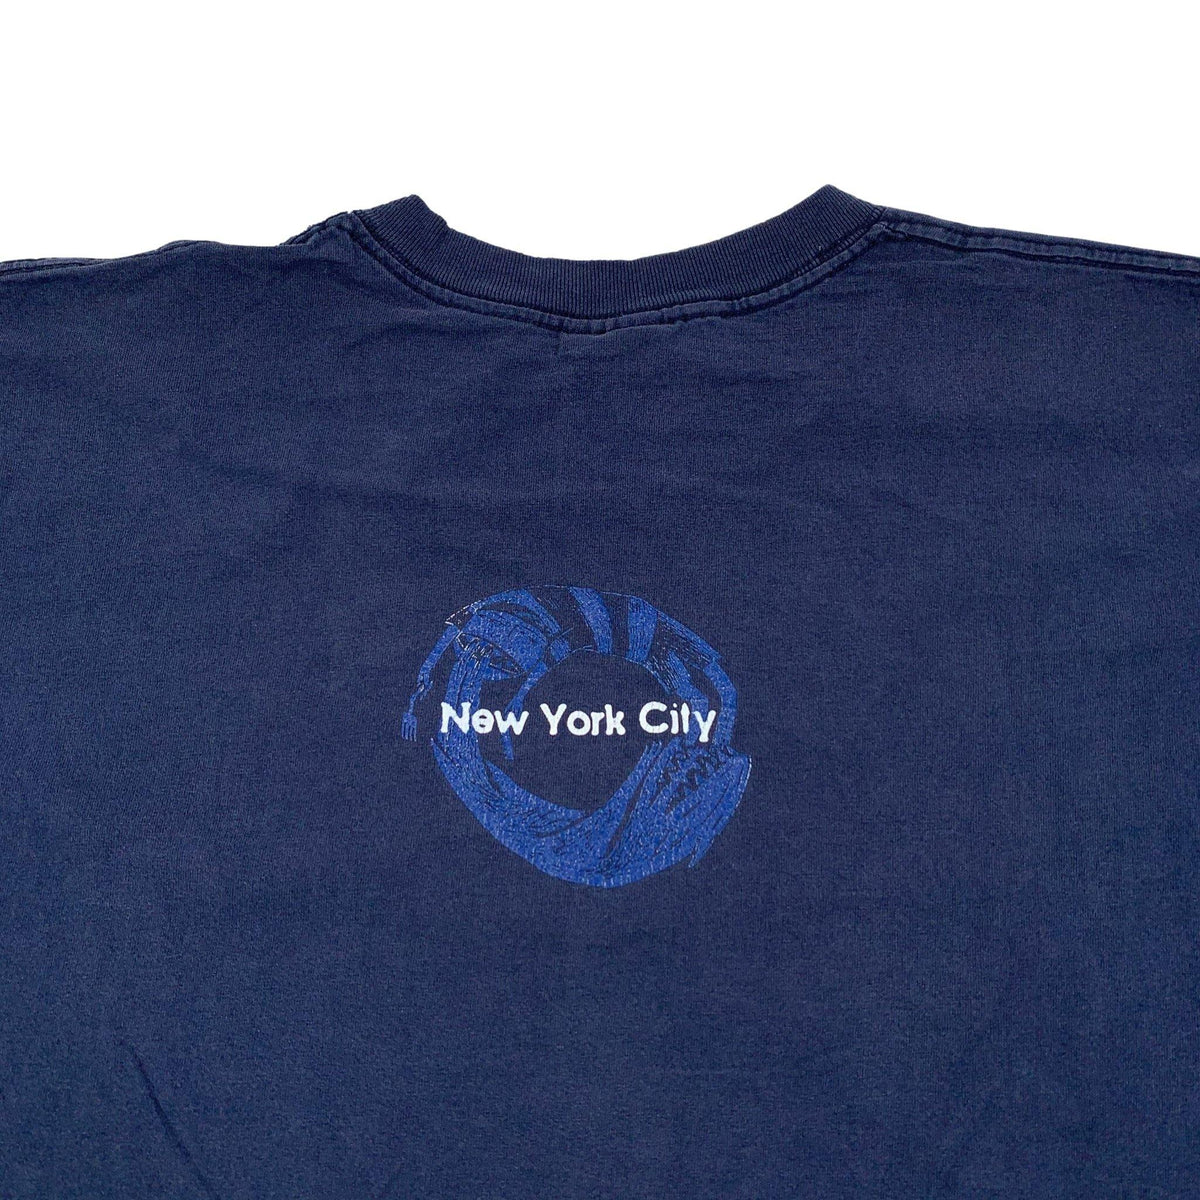 Vintage Quicksand &quot;New York City&quot; T-Shirt - jointcustodydc